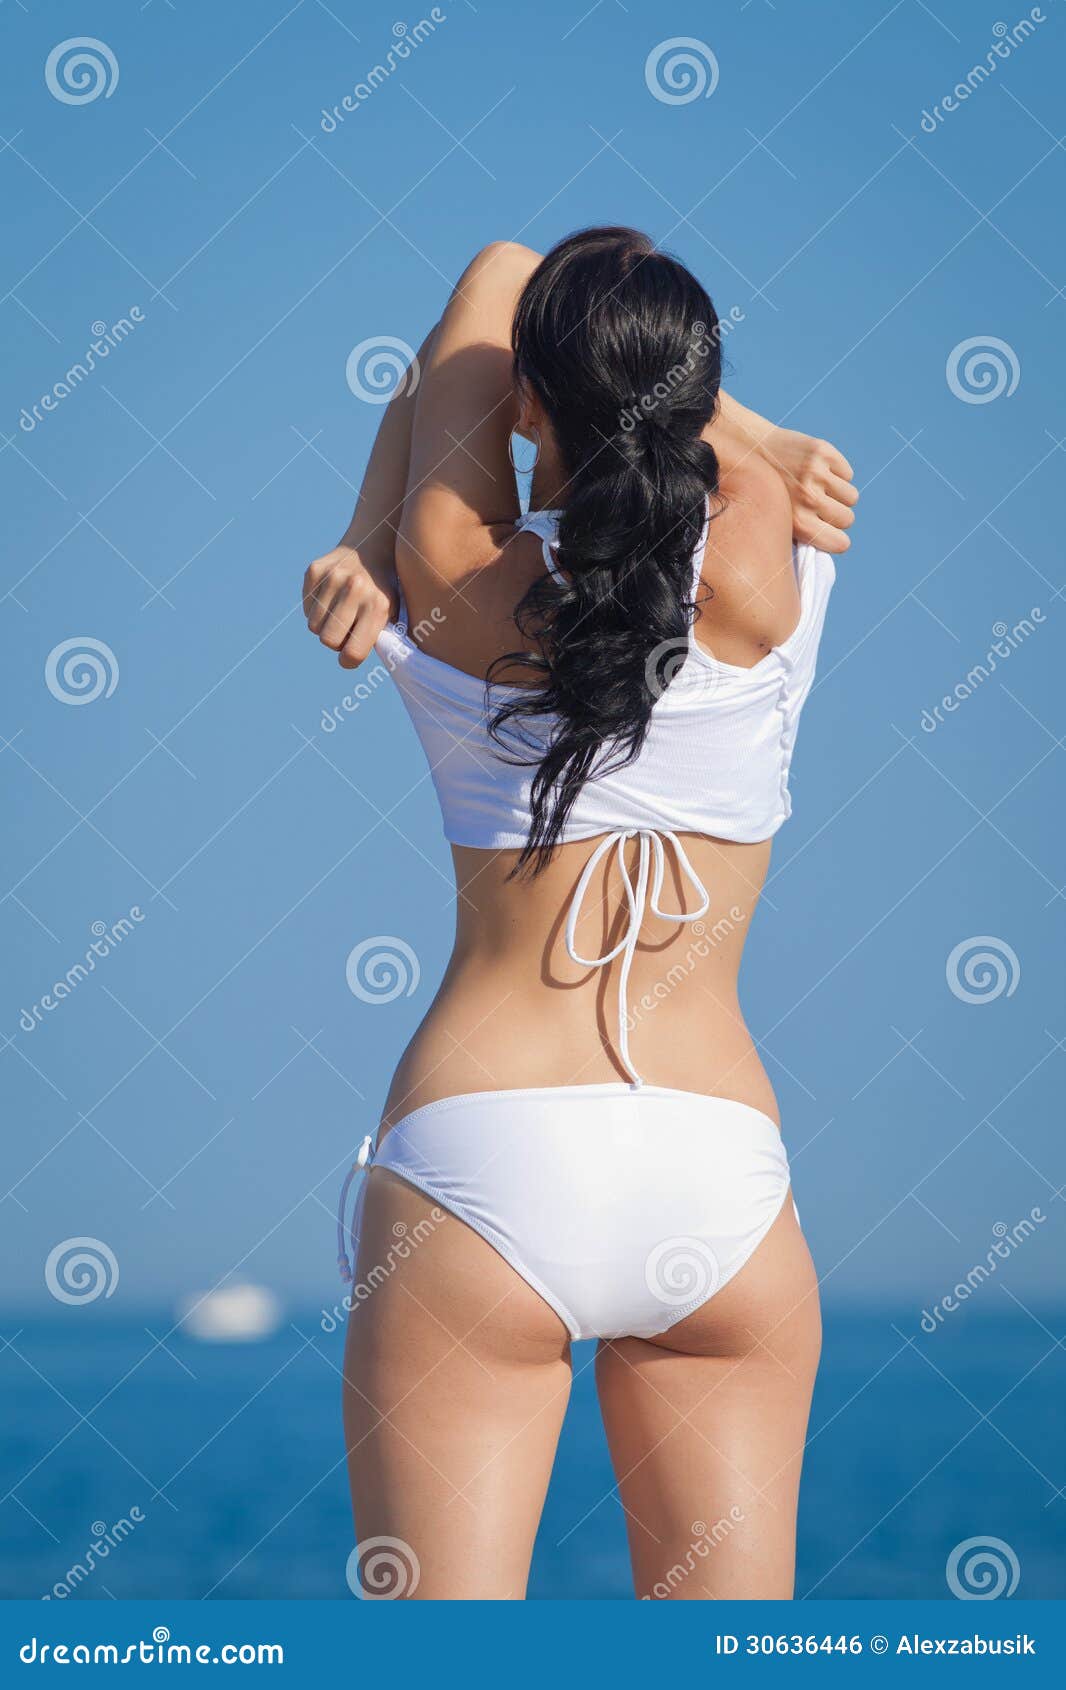 182 Bikini Undressing Stock Photos